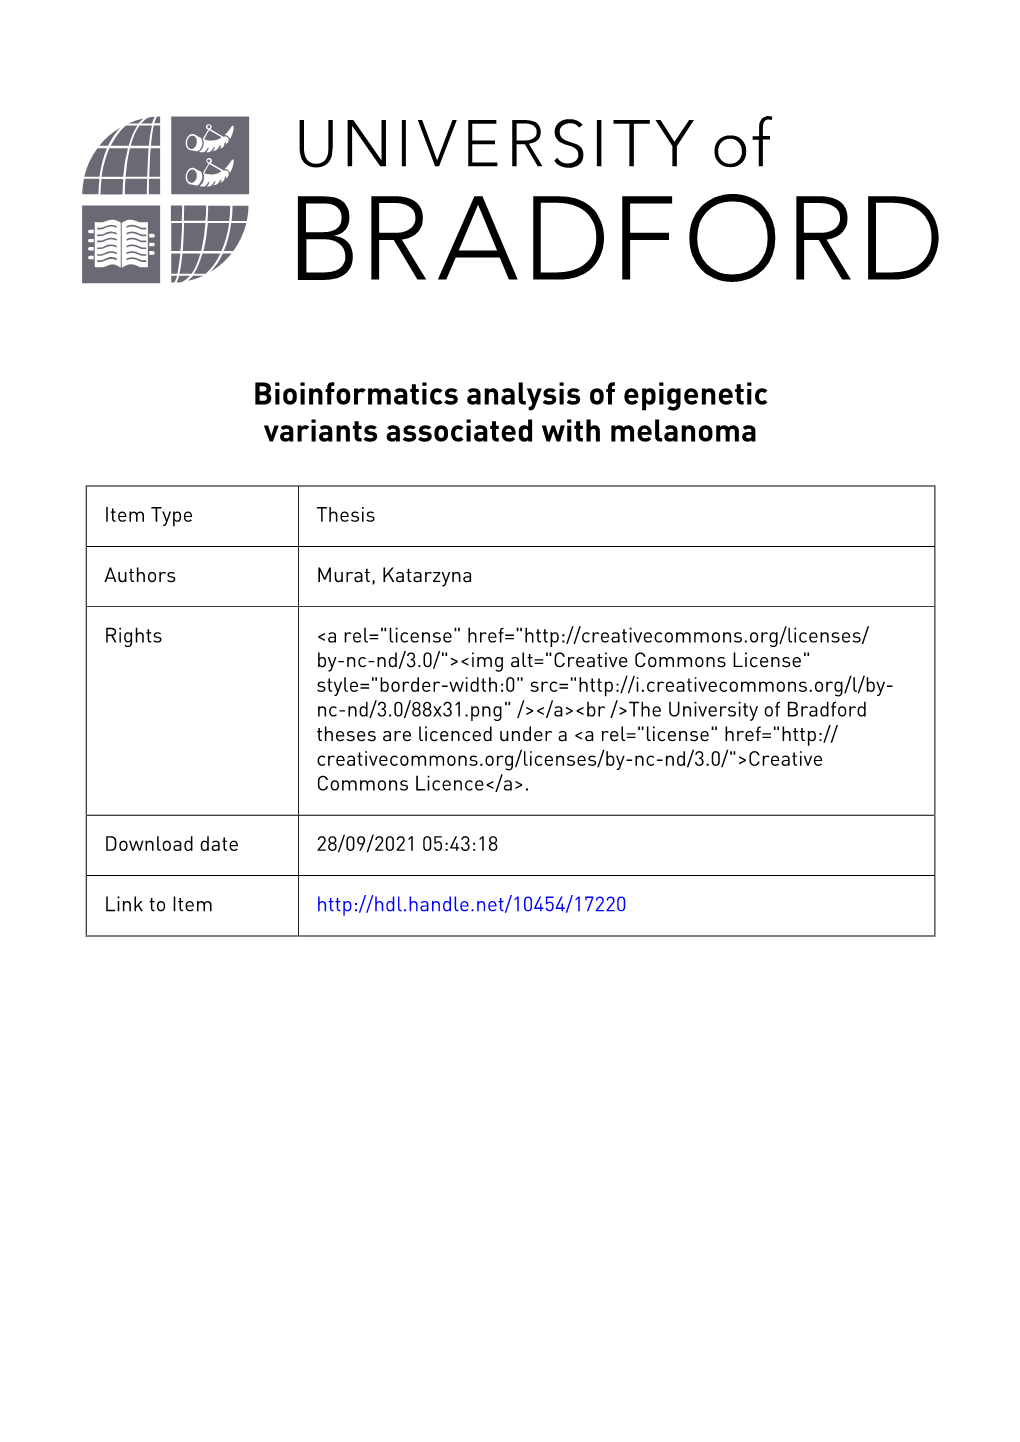 Bioinformatics Analysis of Epigenetic Variants Associated with Melanoma